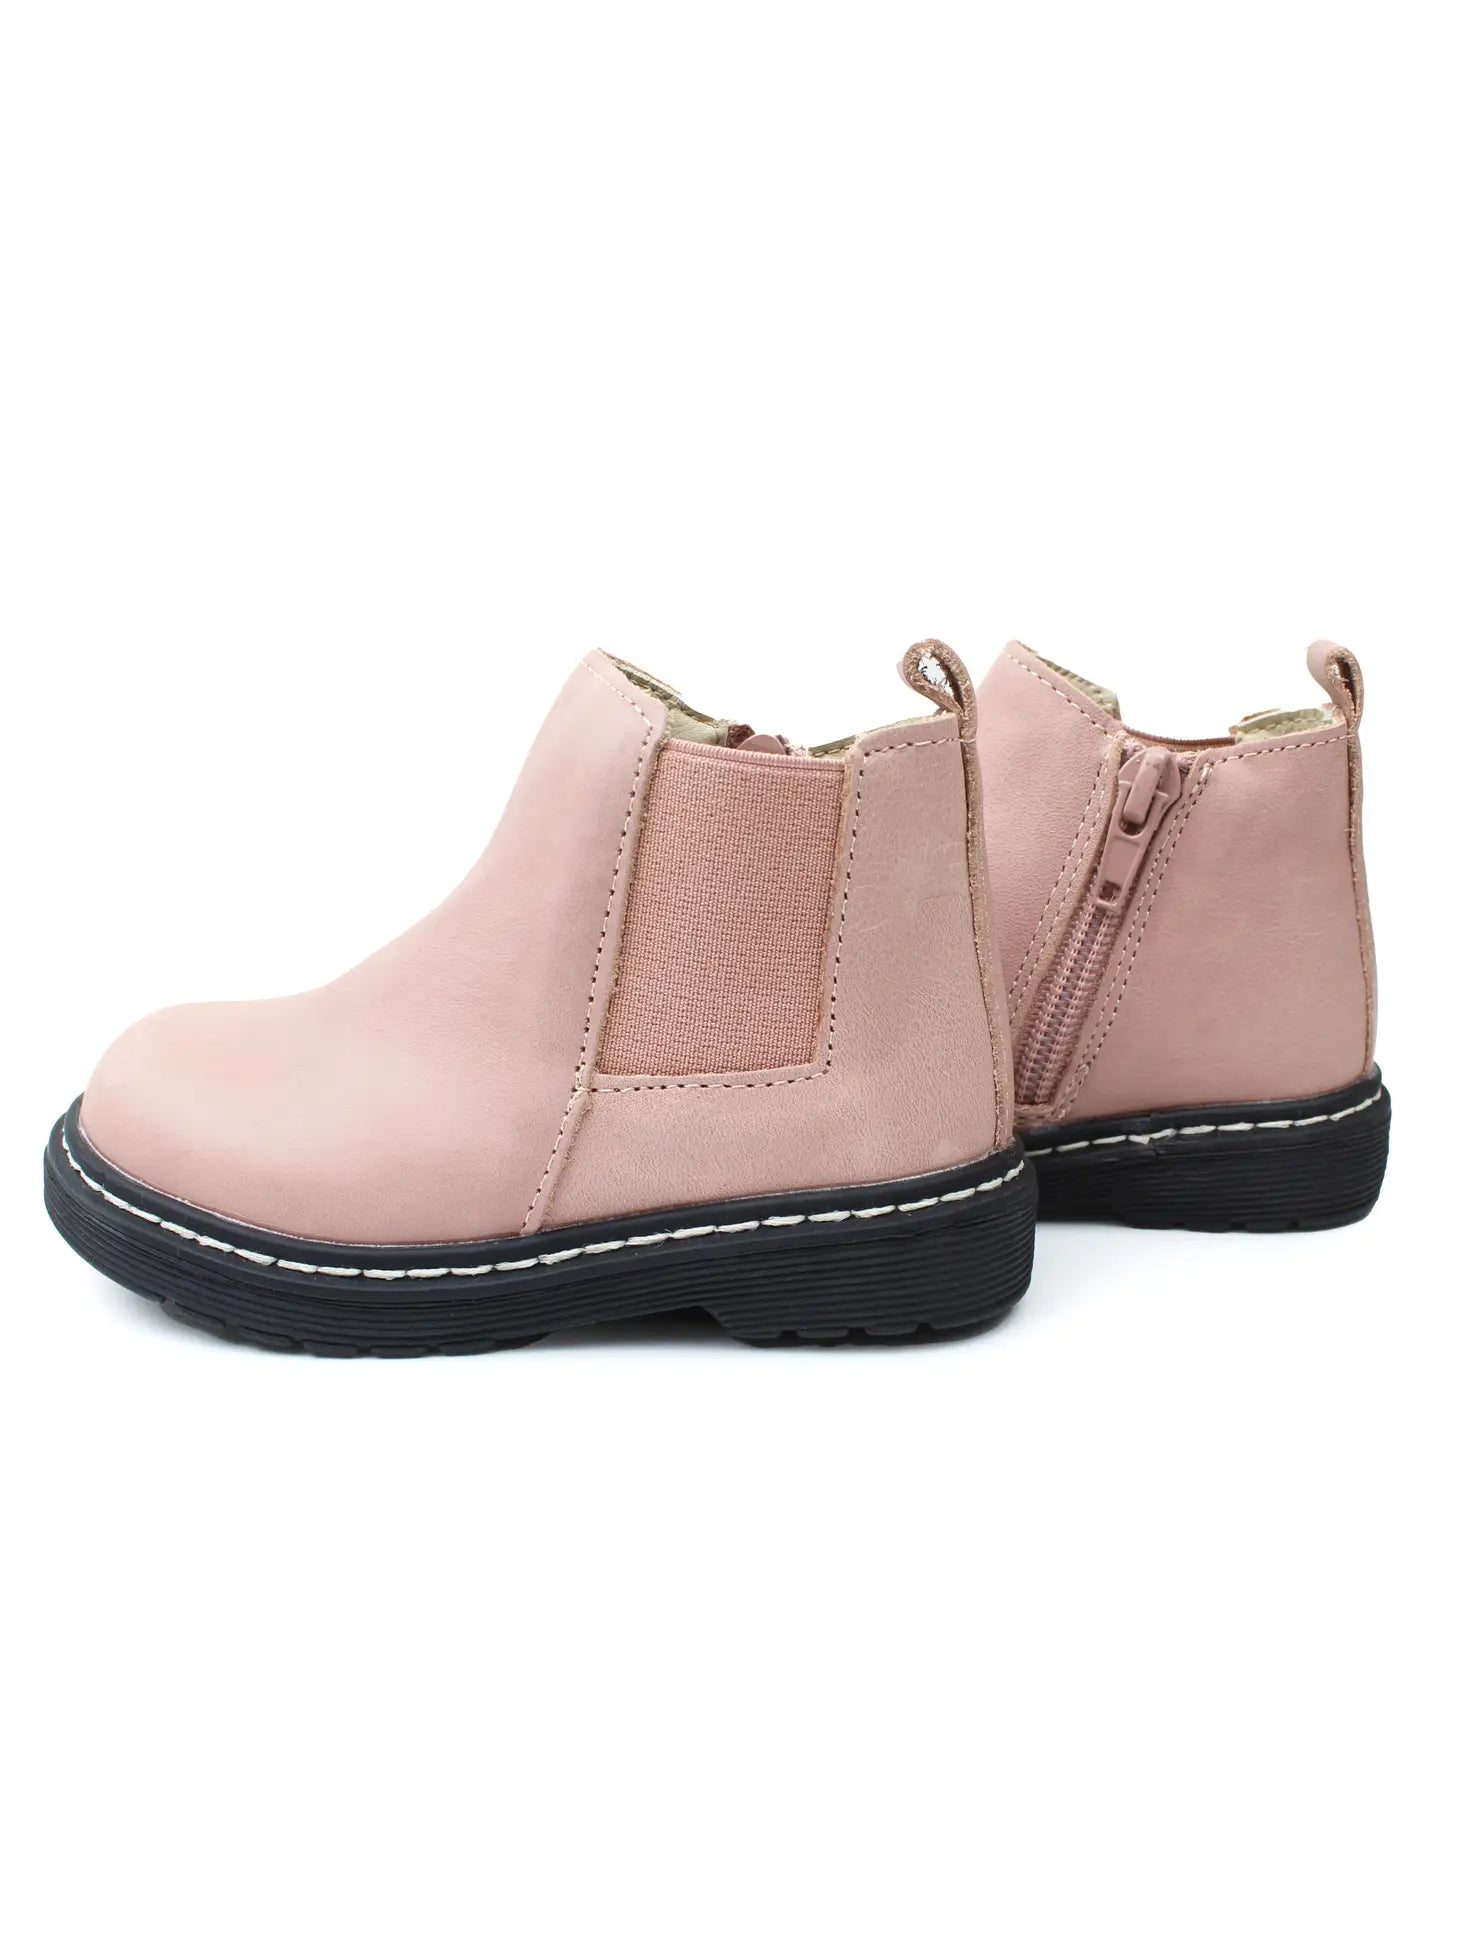 piper finn blush pink Chelsea boot zipper bootie leather boots girl